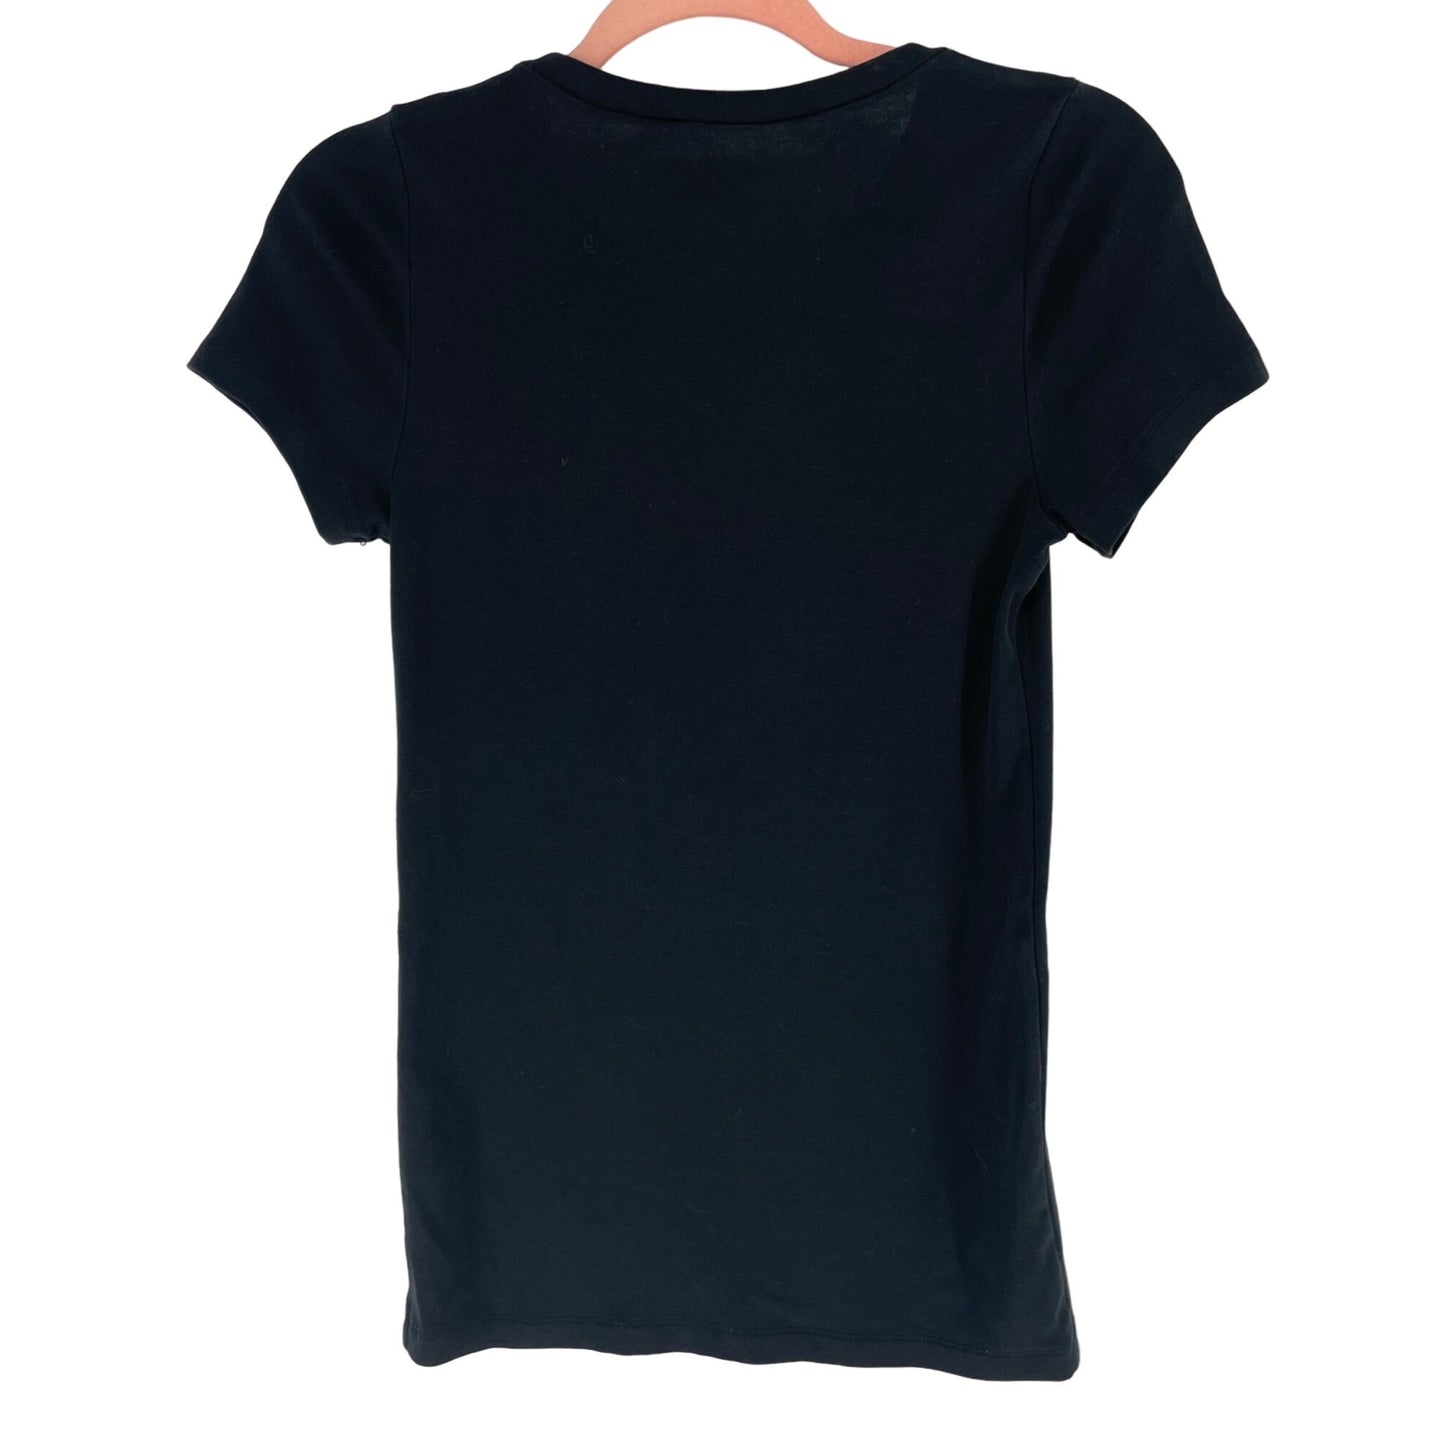 J. Crew Perfect Fit Women's Size Medium Black Crew Neck 100% Cotton T-Shirt